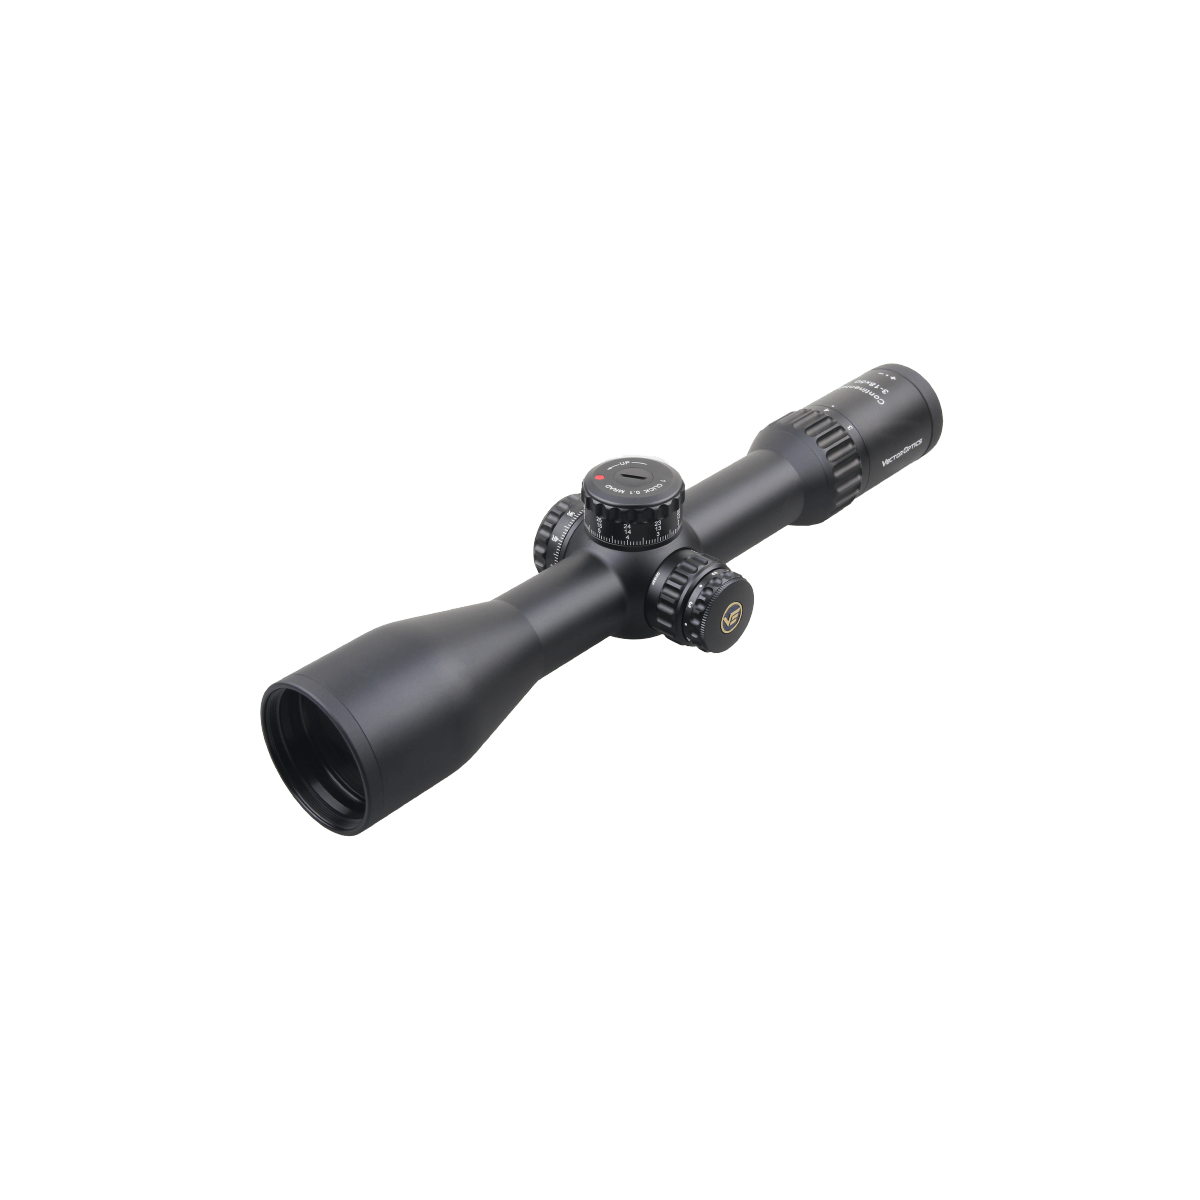 34mm Continental x6 3-18x50 FFP Riflescope